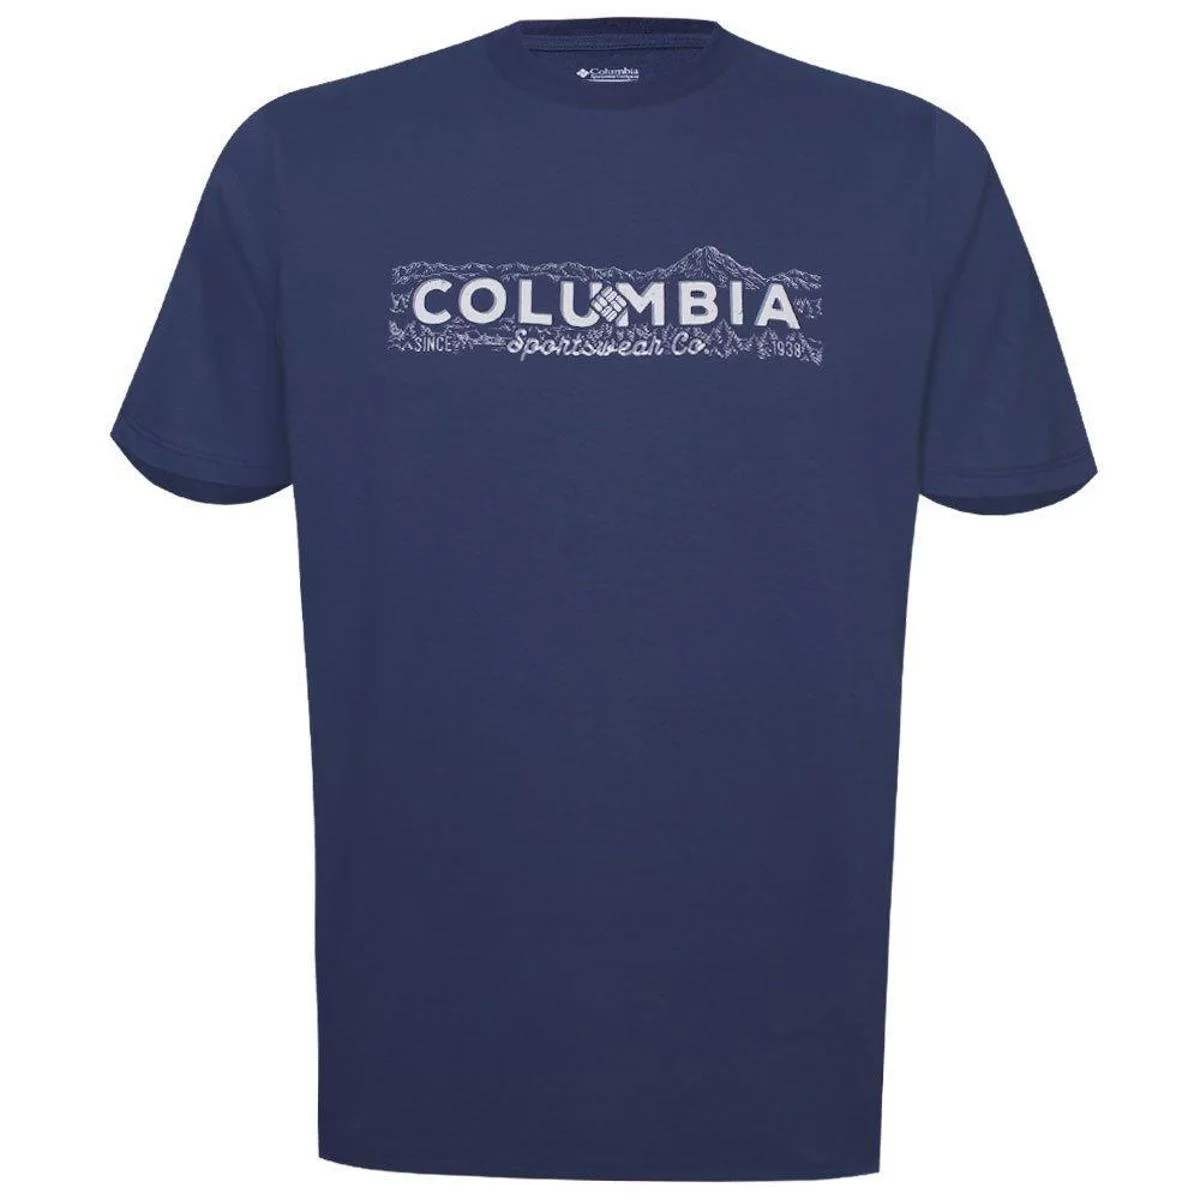 Camiseta Columbia Csc & Co. 1938 Masc - Marinho